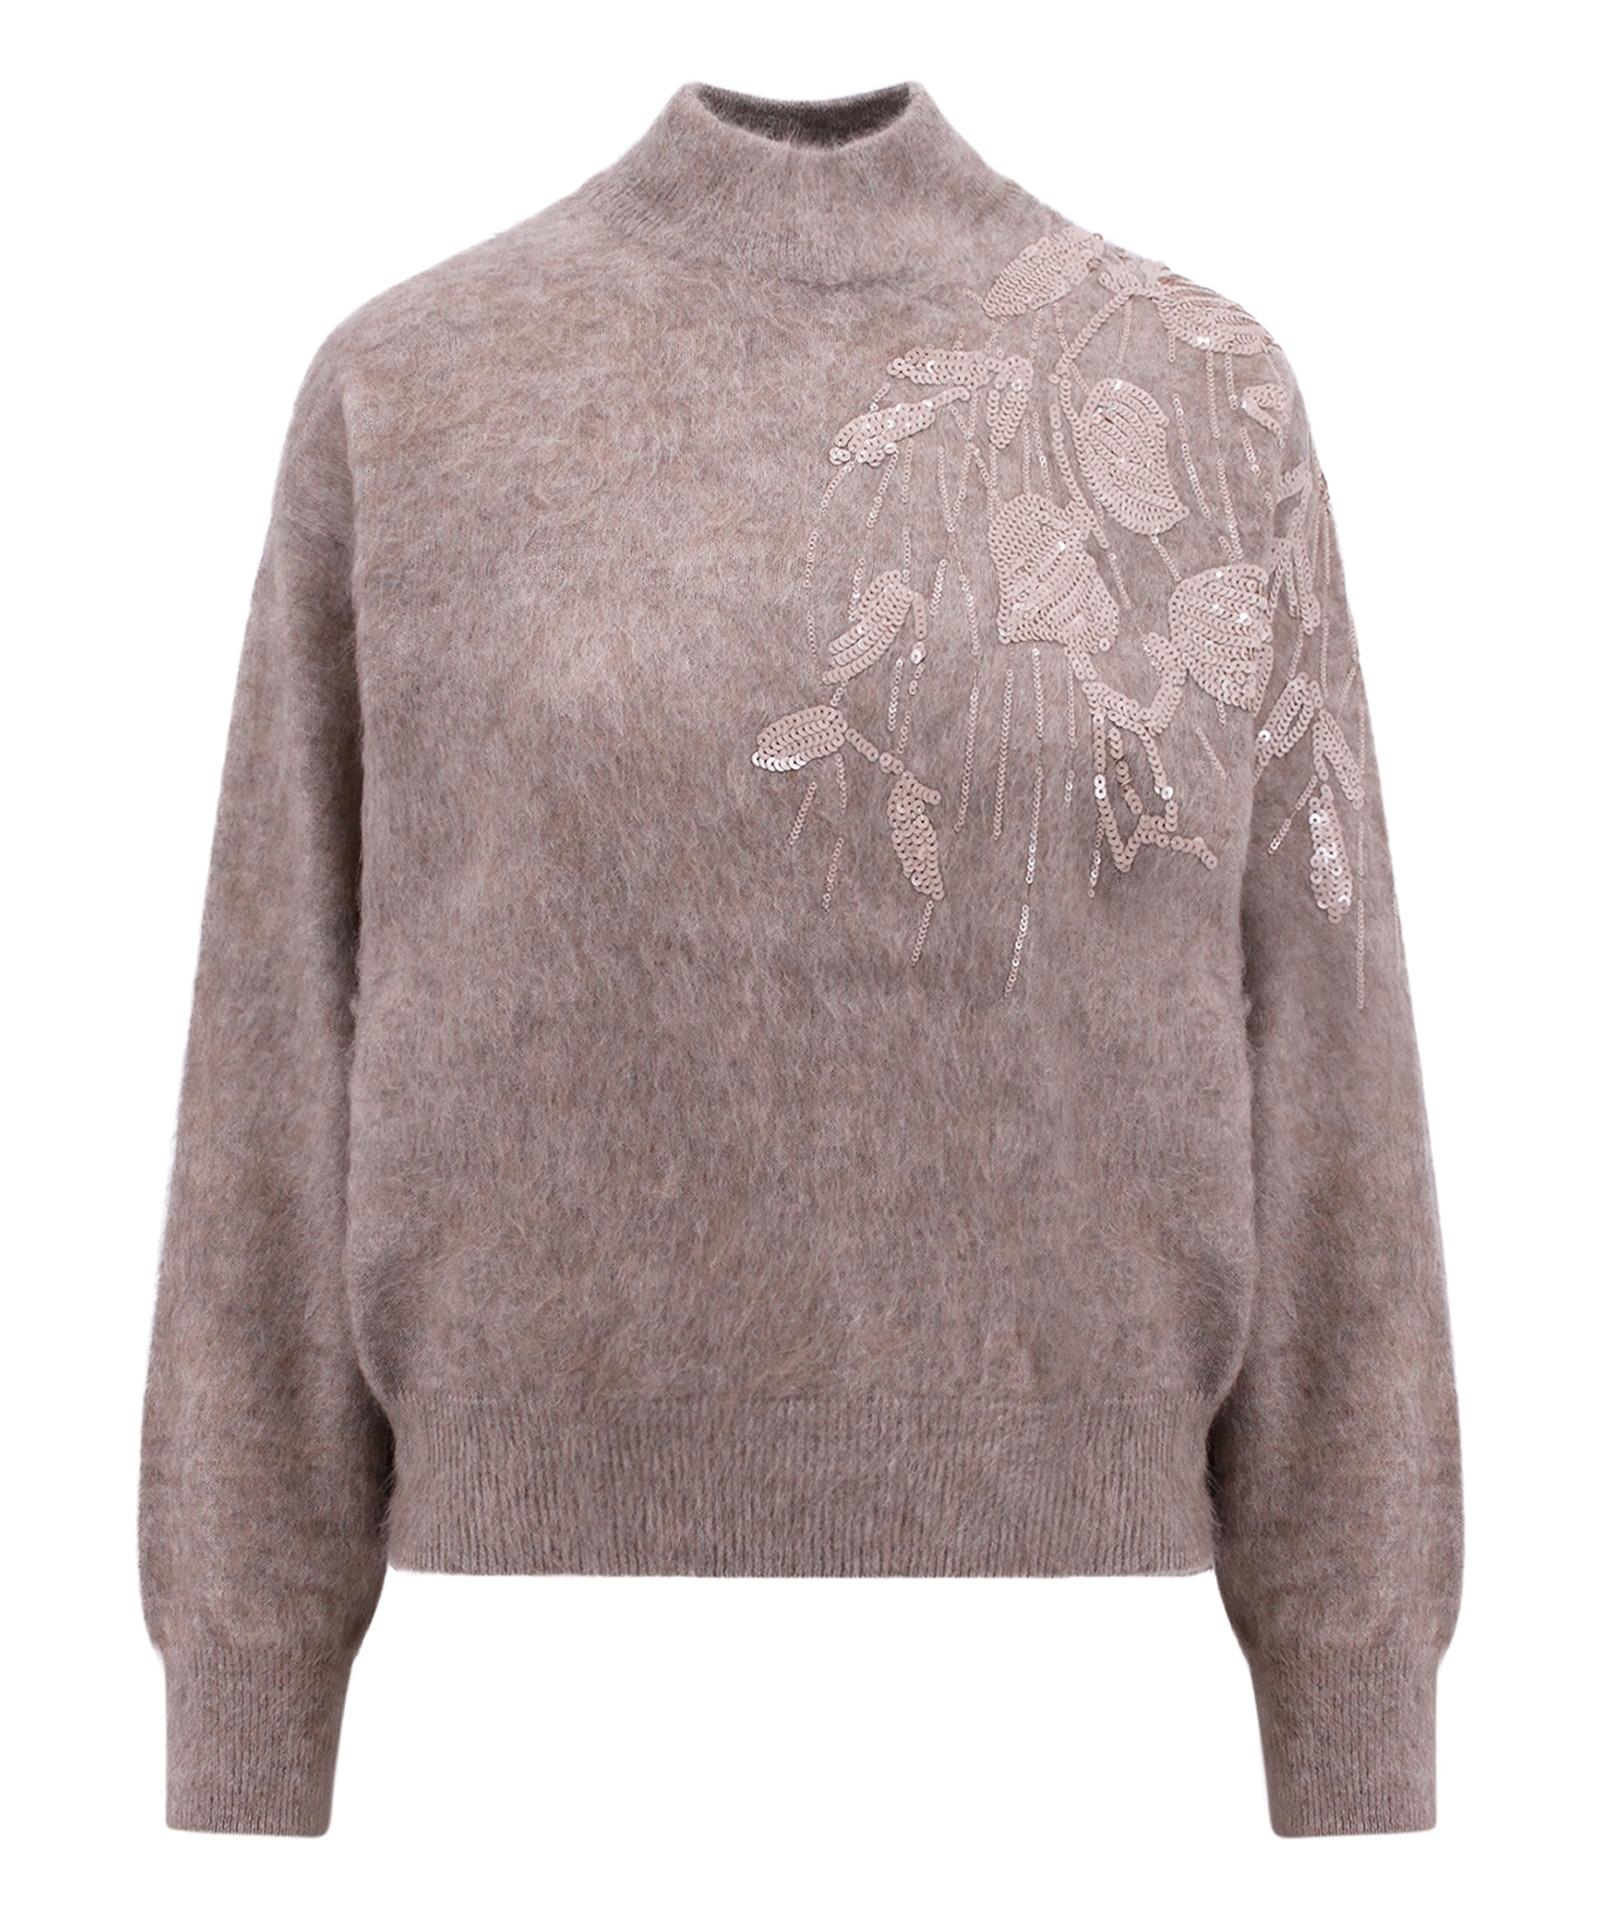 Brunello Cucinelli Sweater in Brown | Lyst